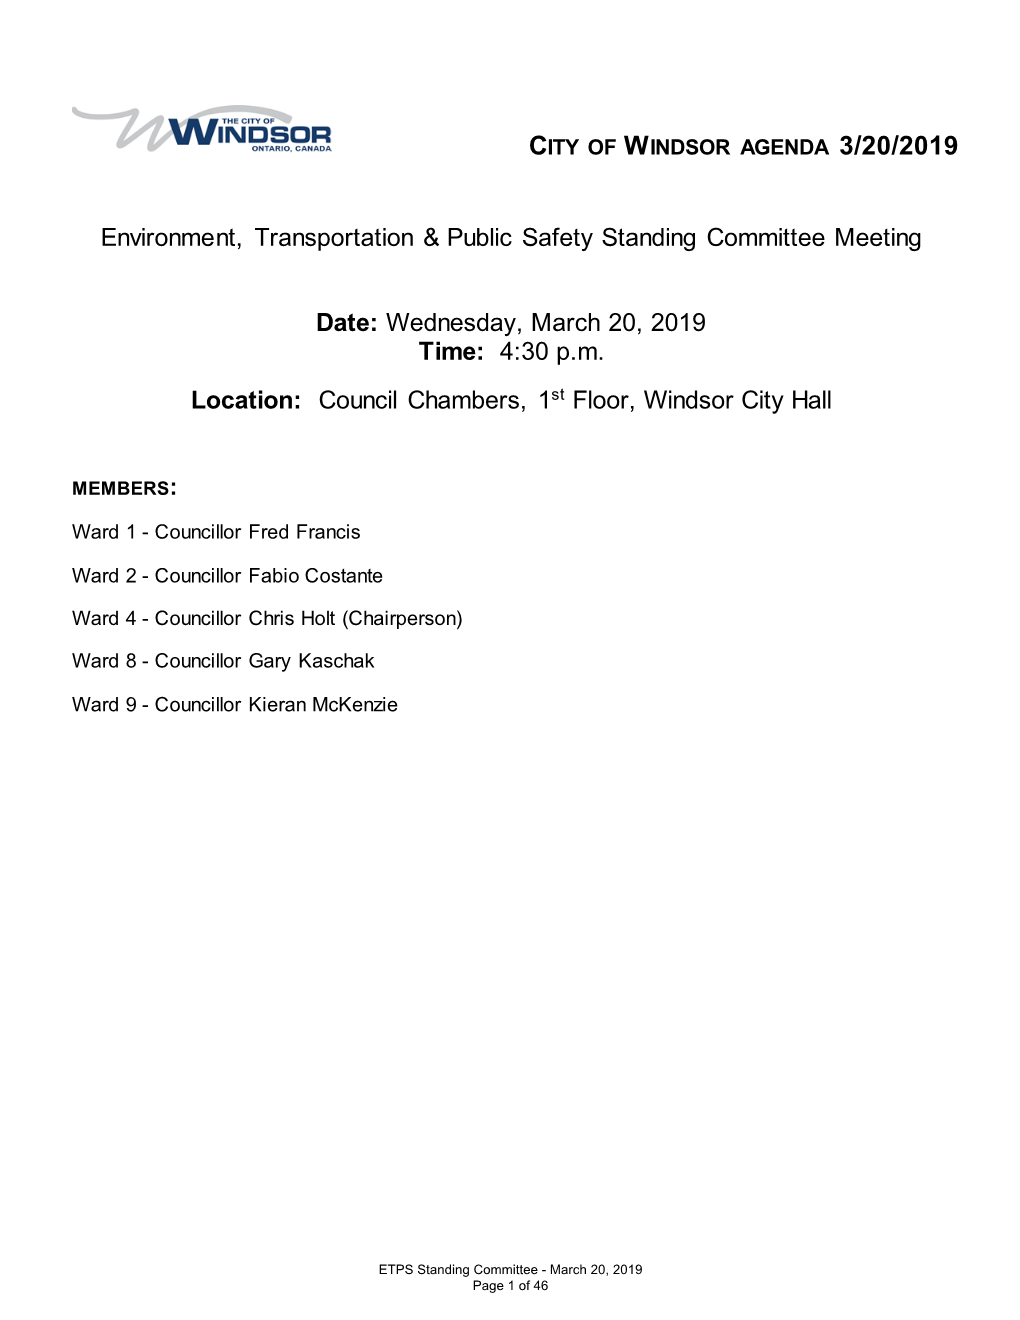 Meeting Documents Environment, Transportation & Public Safety ETP